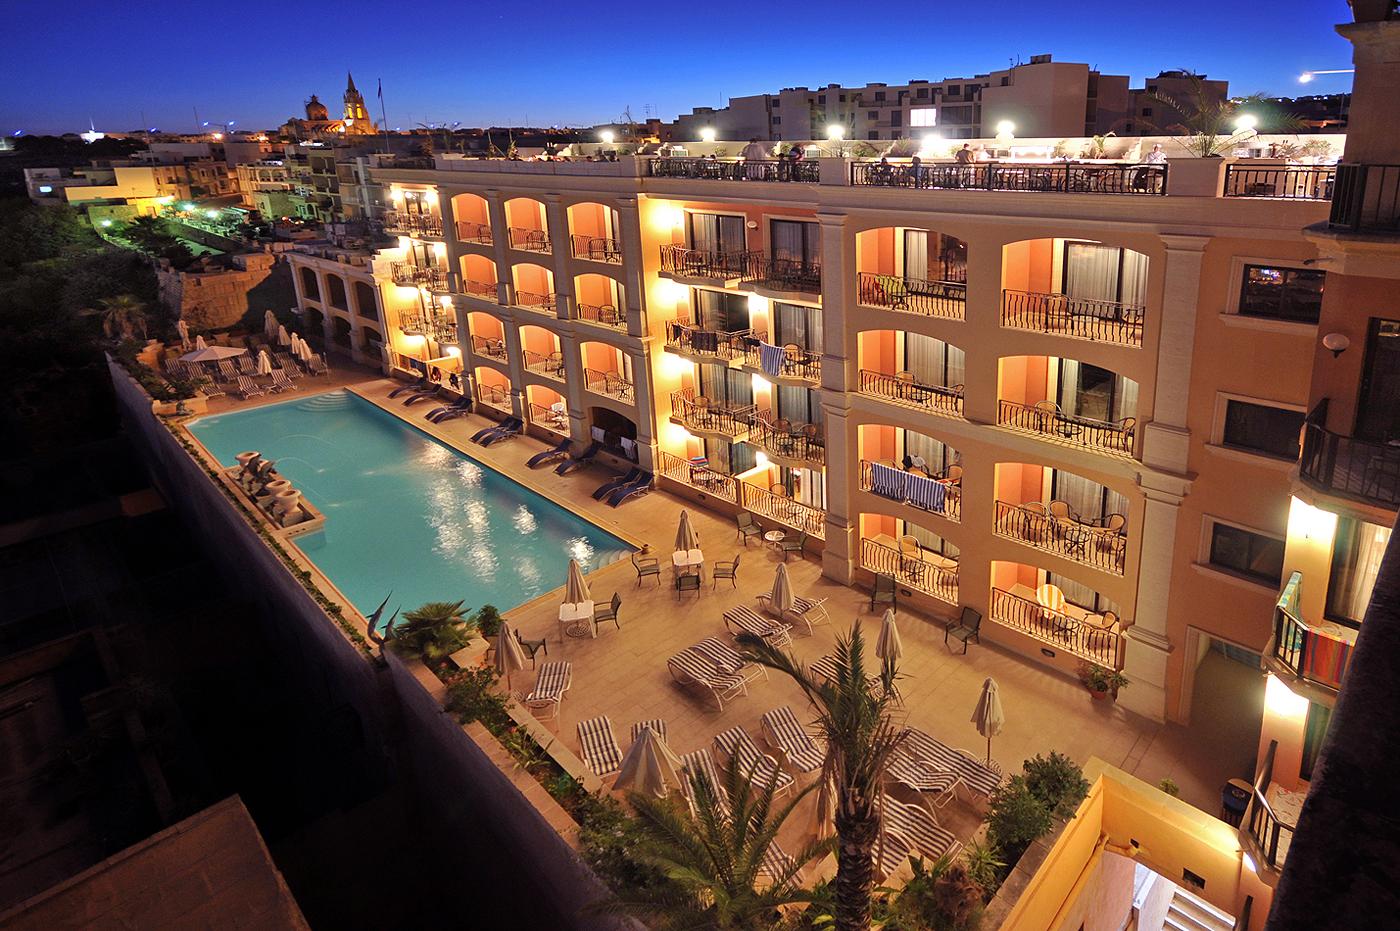 The Grand Hotel Gozo